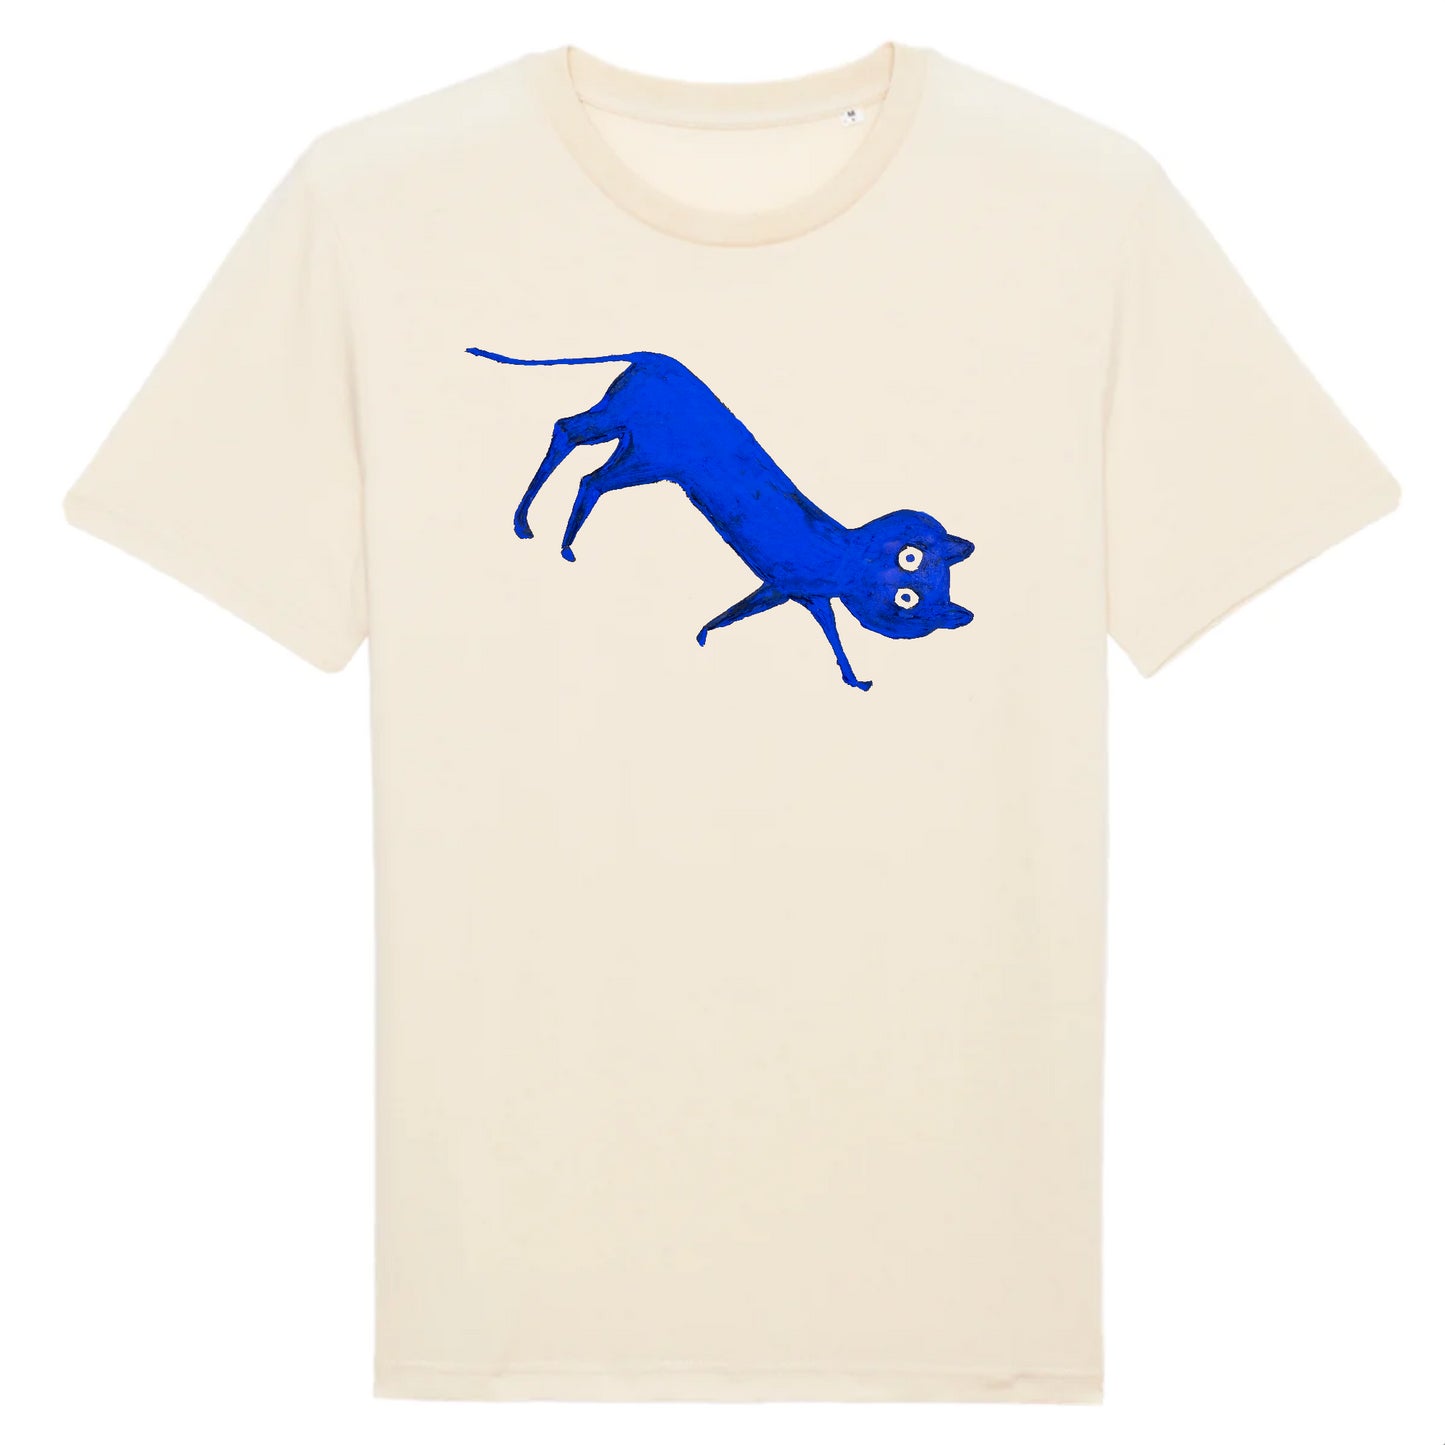 Blue Cat by Bill Traylor, c.1941 - Organic Cotton T-Shirt